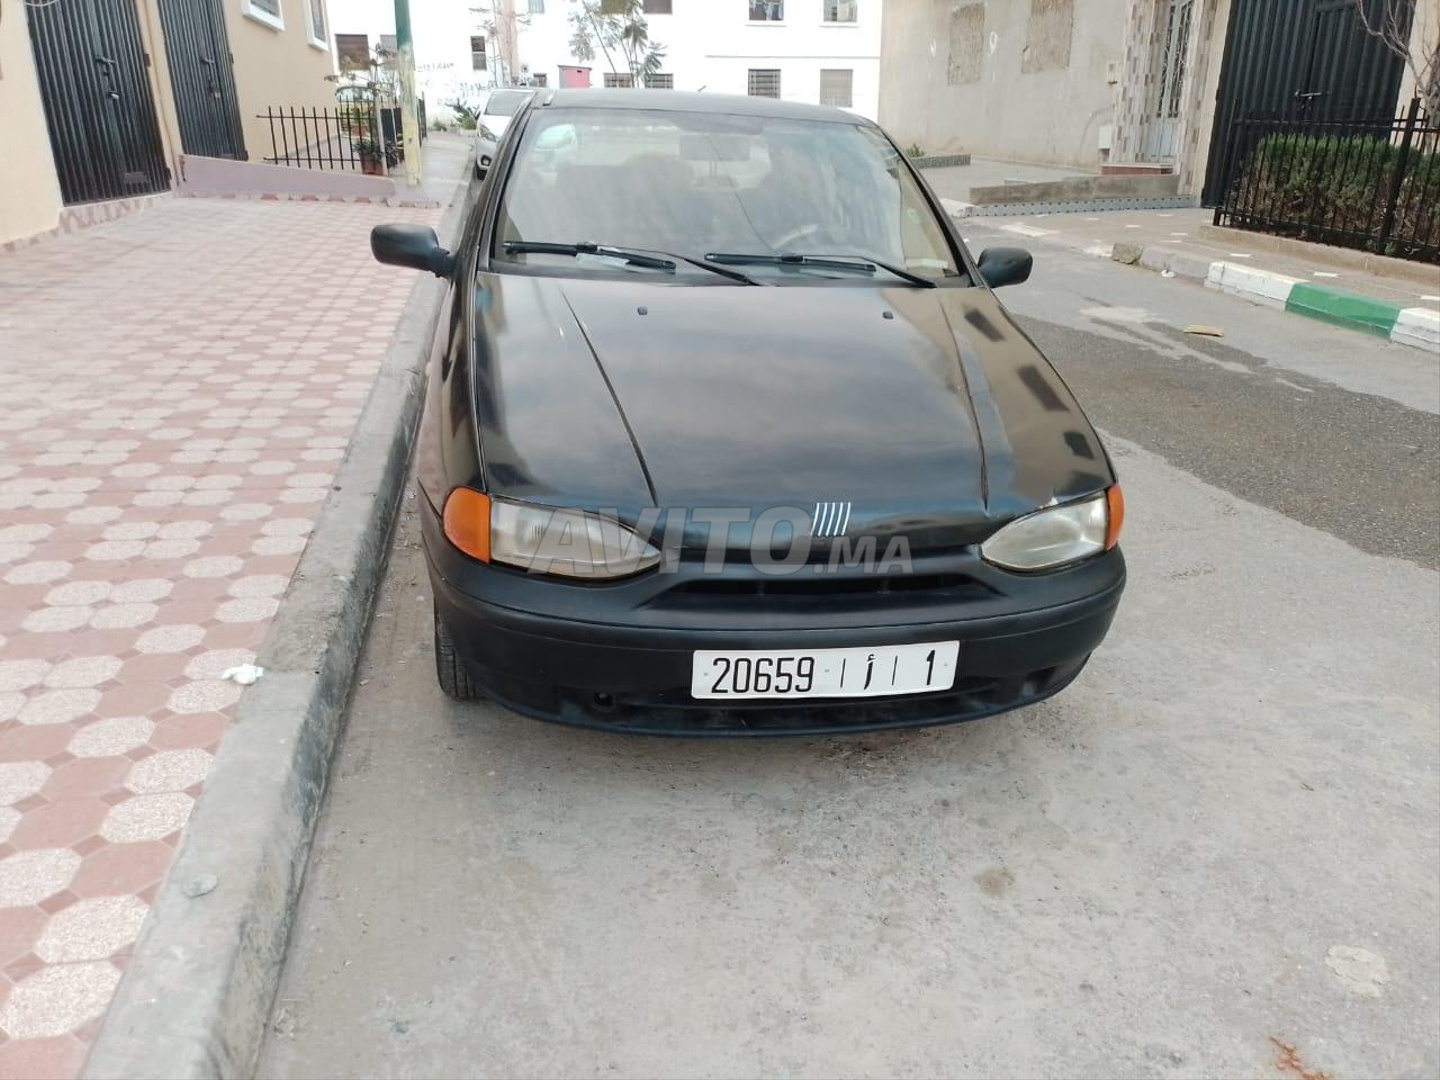 FIAT Palio 2000 diesel 402341 occasion à Mohammedia Maroc